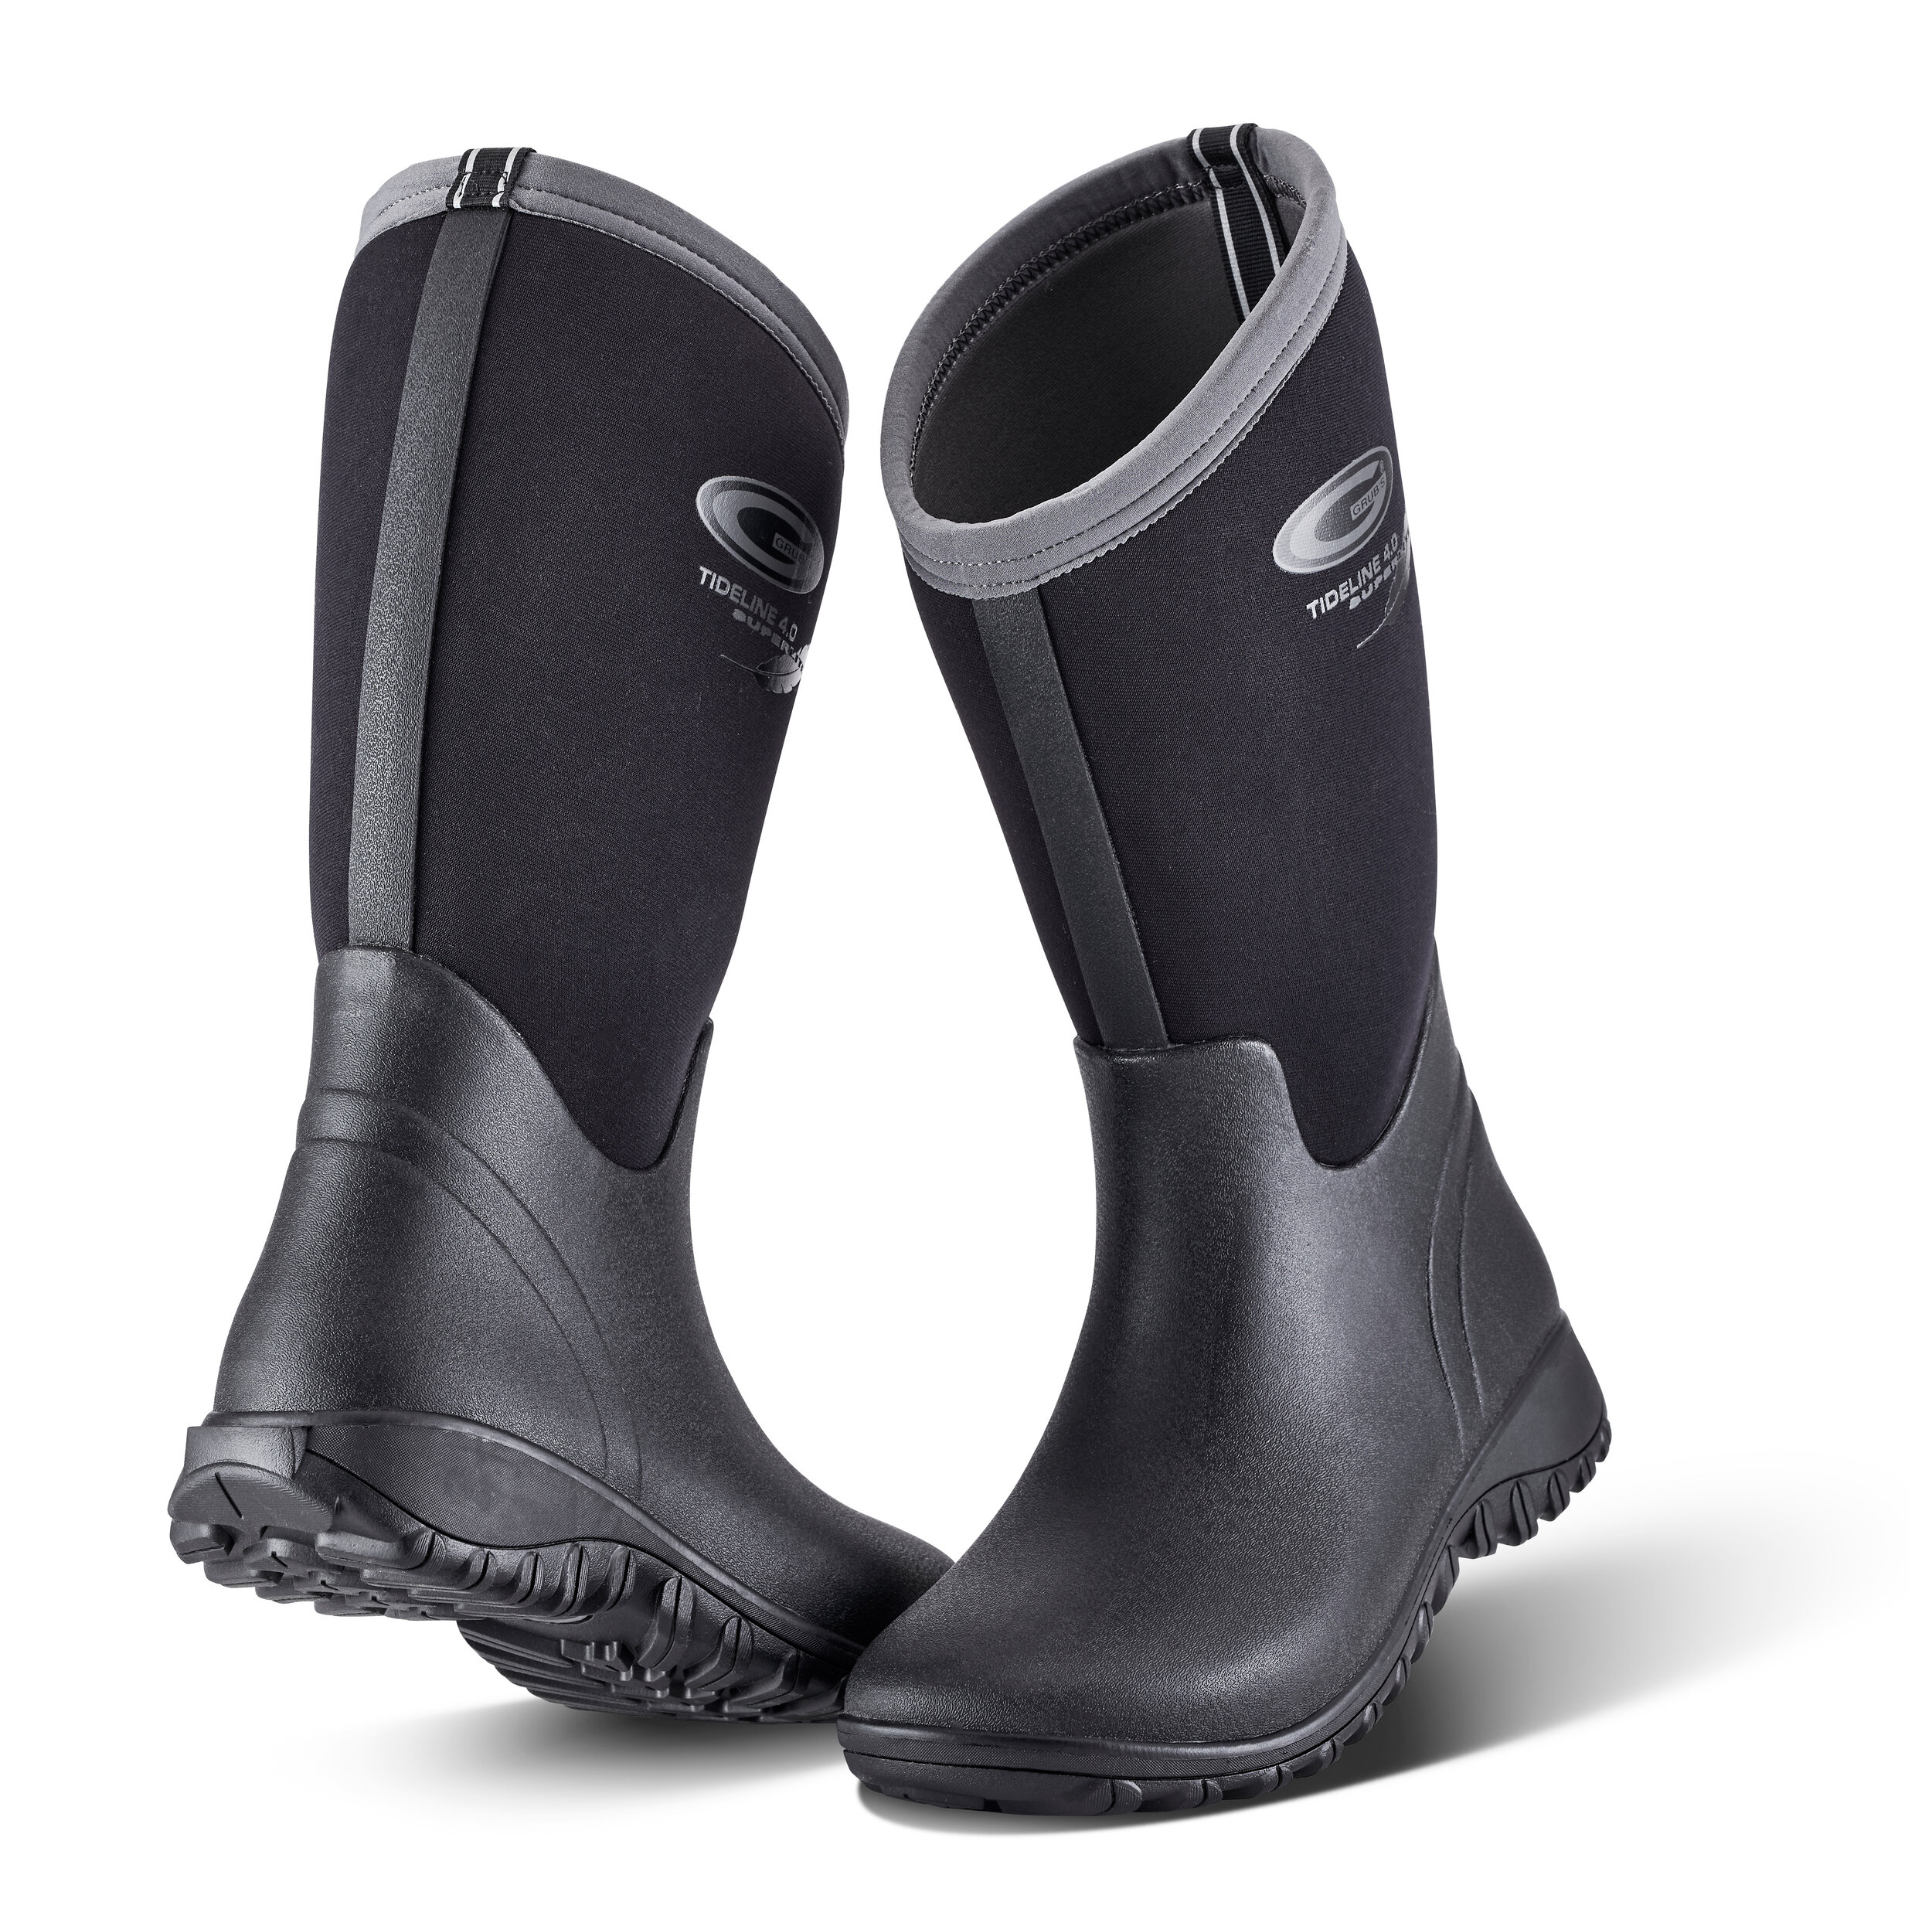 Bogs Crandall Tall Womens Ladies Neoprene Wellies Wellington Boots Grey Size 4-8 